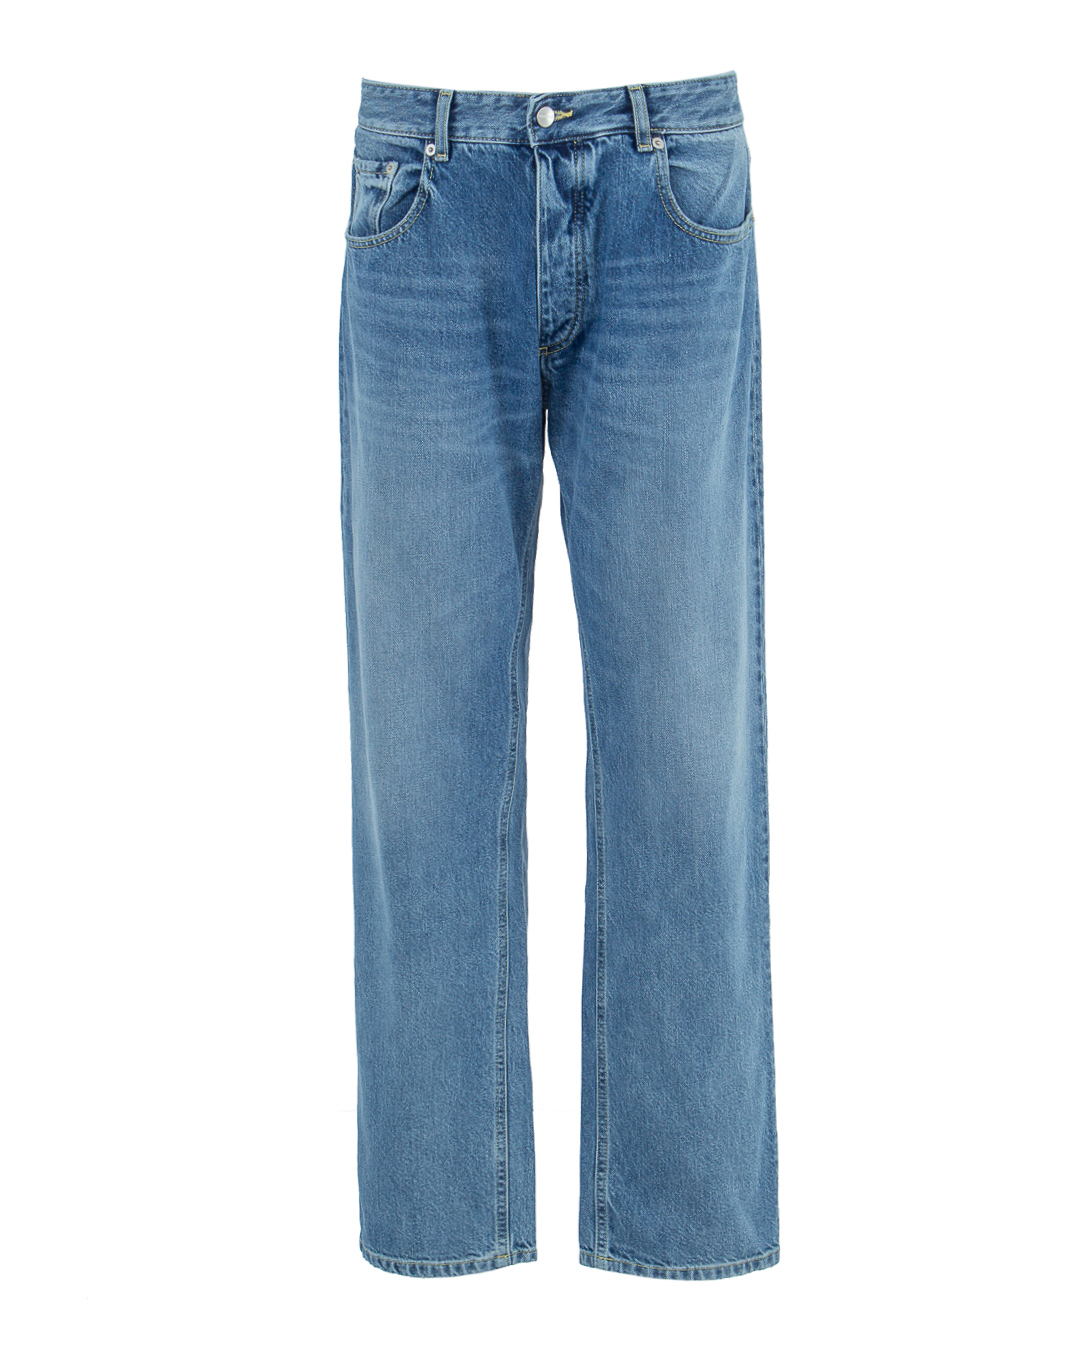 джинсы ICON DENIM KANYEID752 синий 38, размер 38 - фото 1